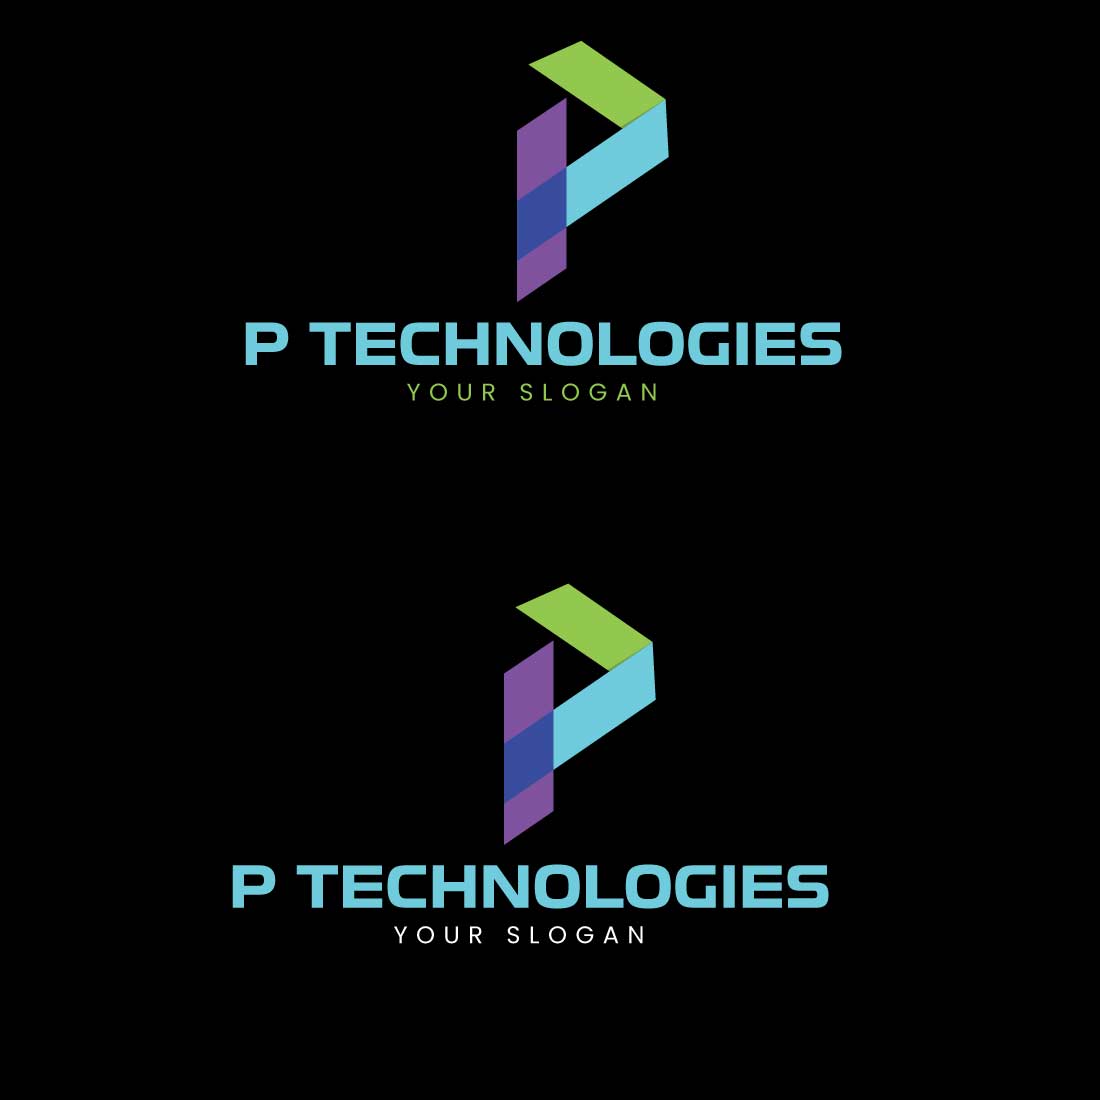 P Technologies Brand Logo Design preview image.